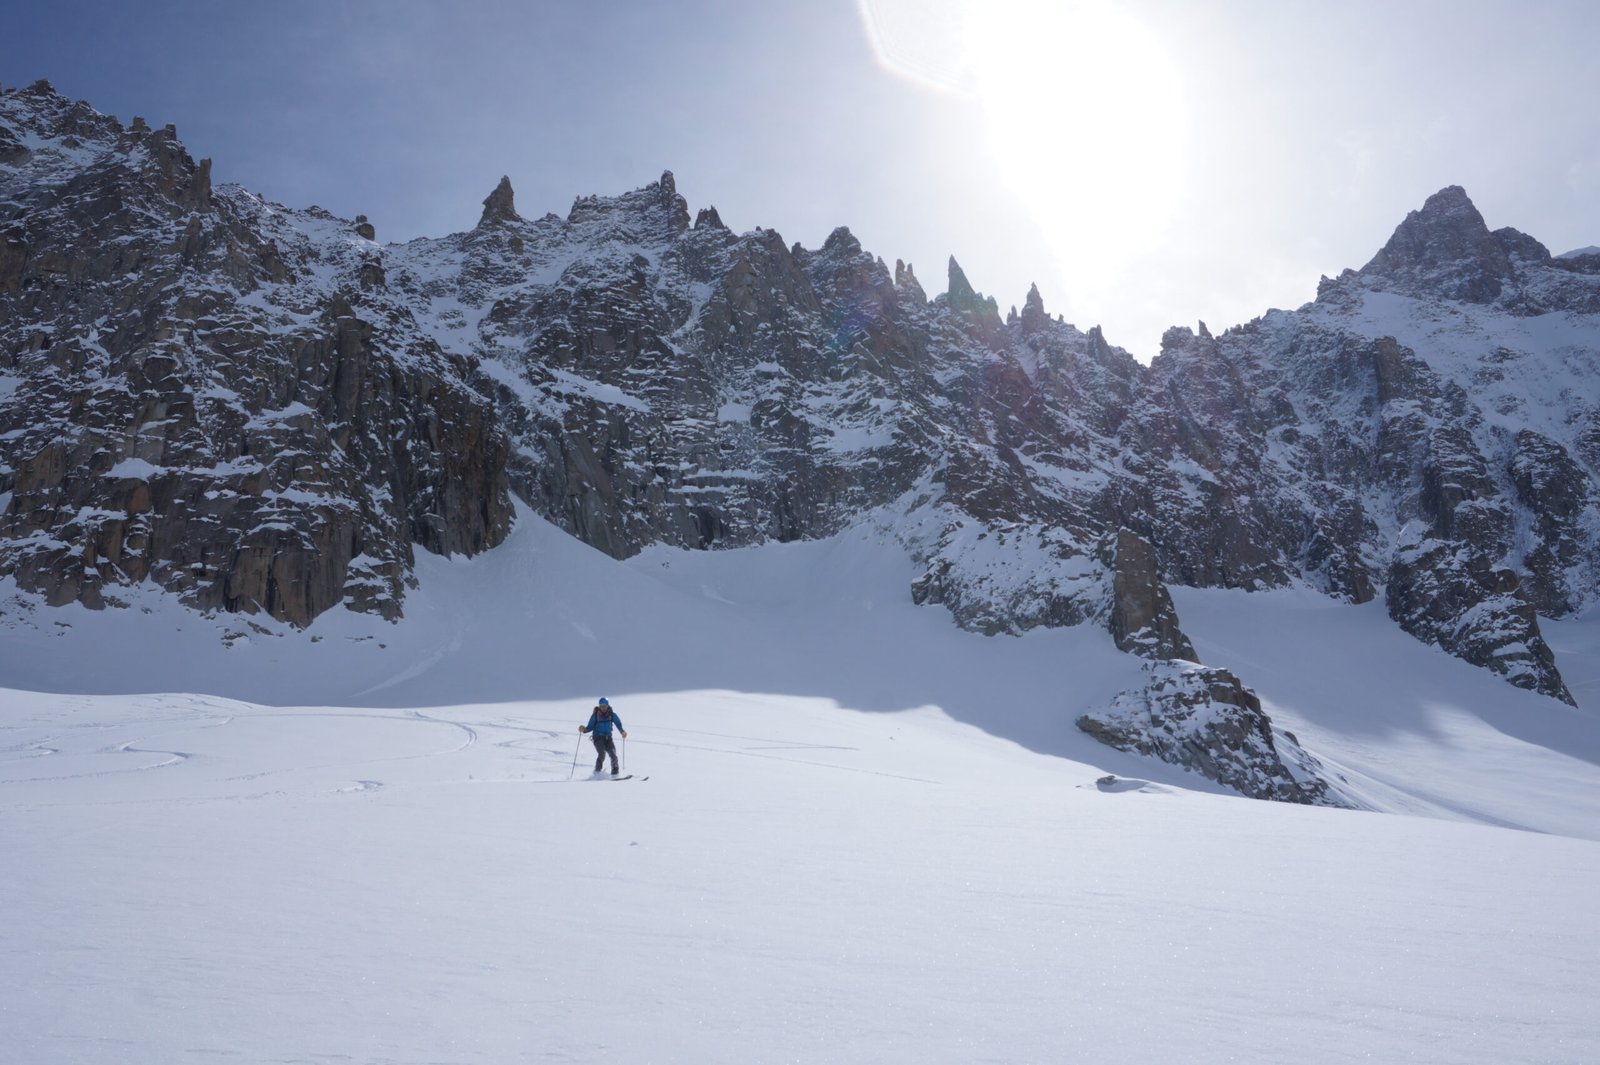 Ski de rando a la journee au dessus de la vallée blanche